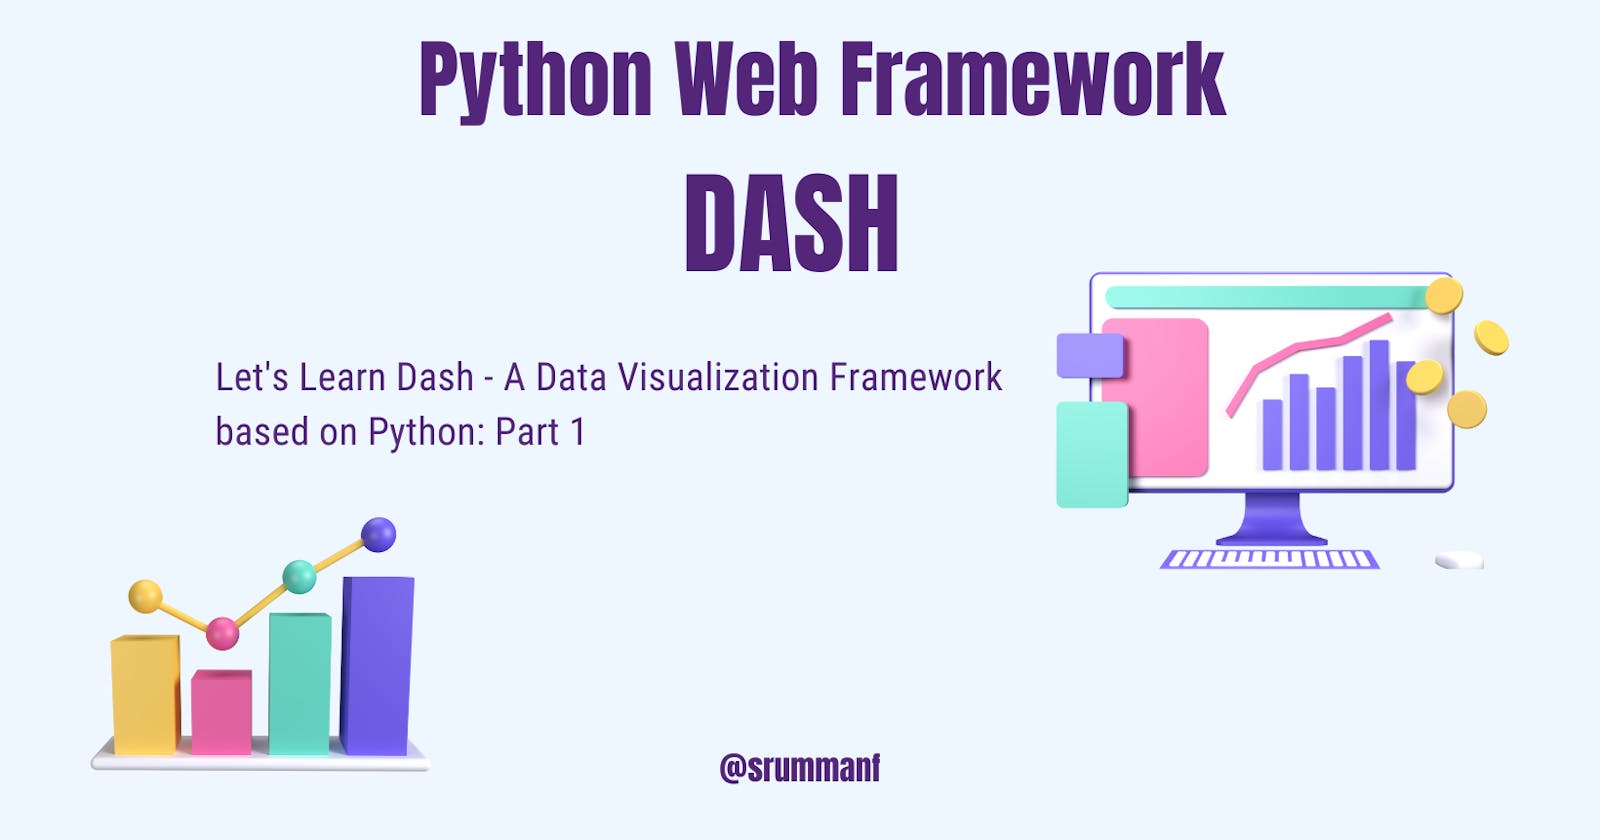 Let's Learn Dash - A Data Visualization Framework based on Python: Part 1